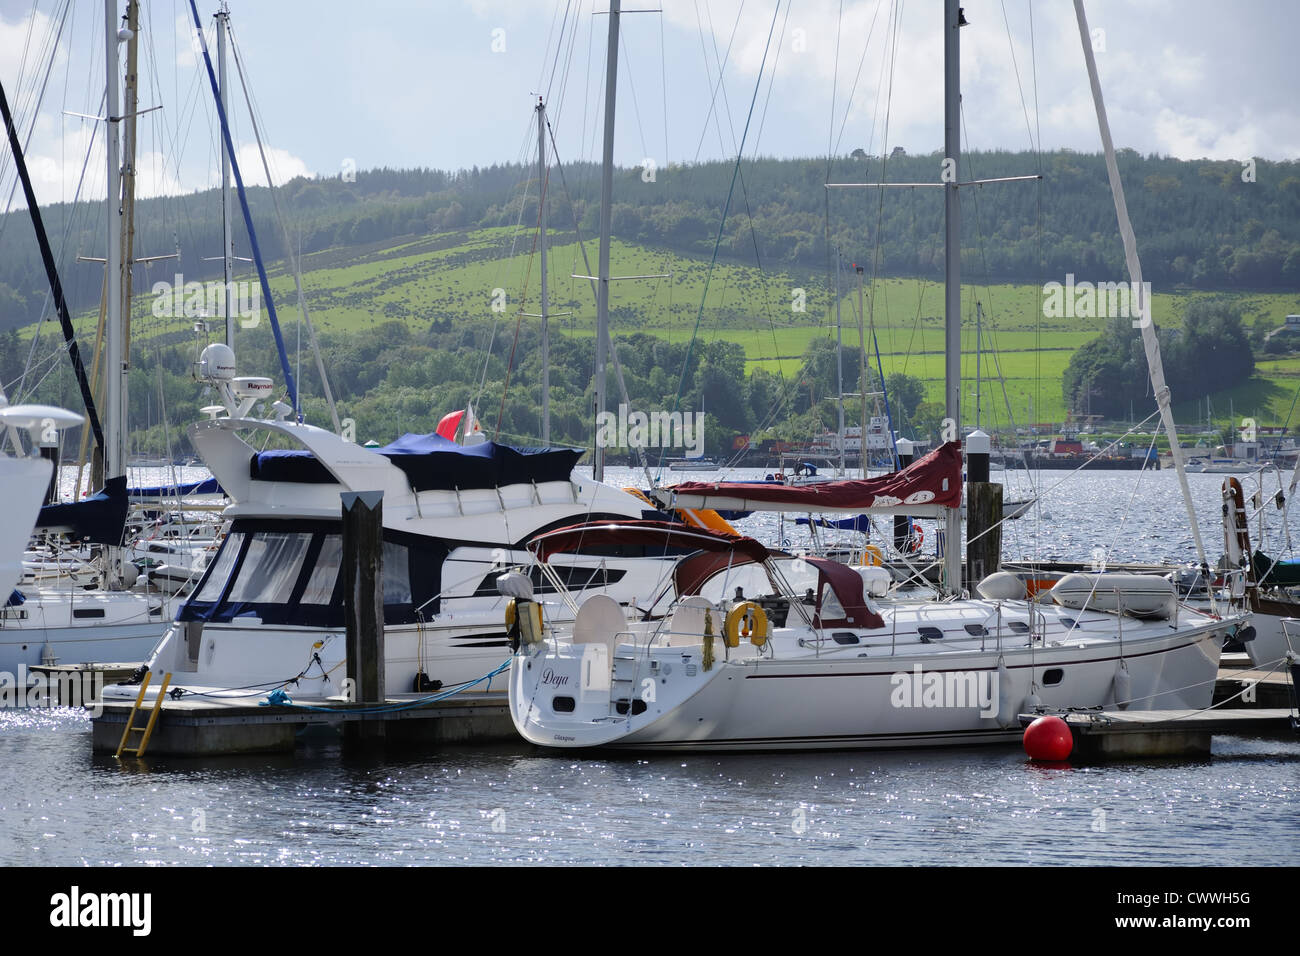 Boats in a marina in Rhu / Helensburgh, Scotland, UK Stock Photo